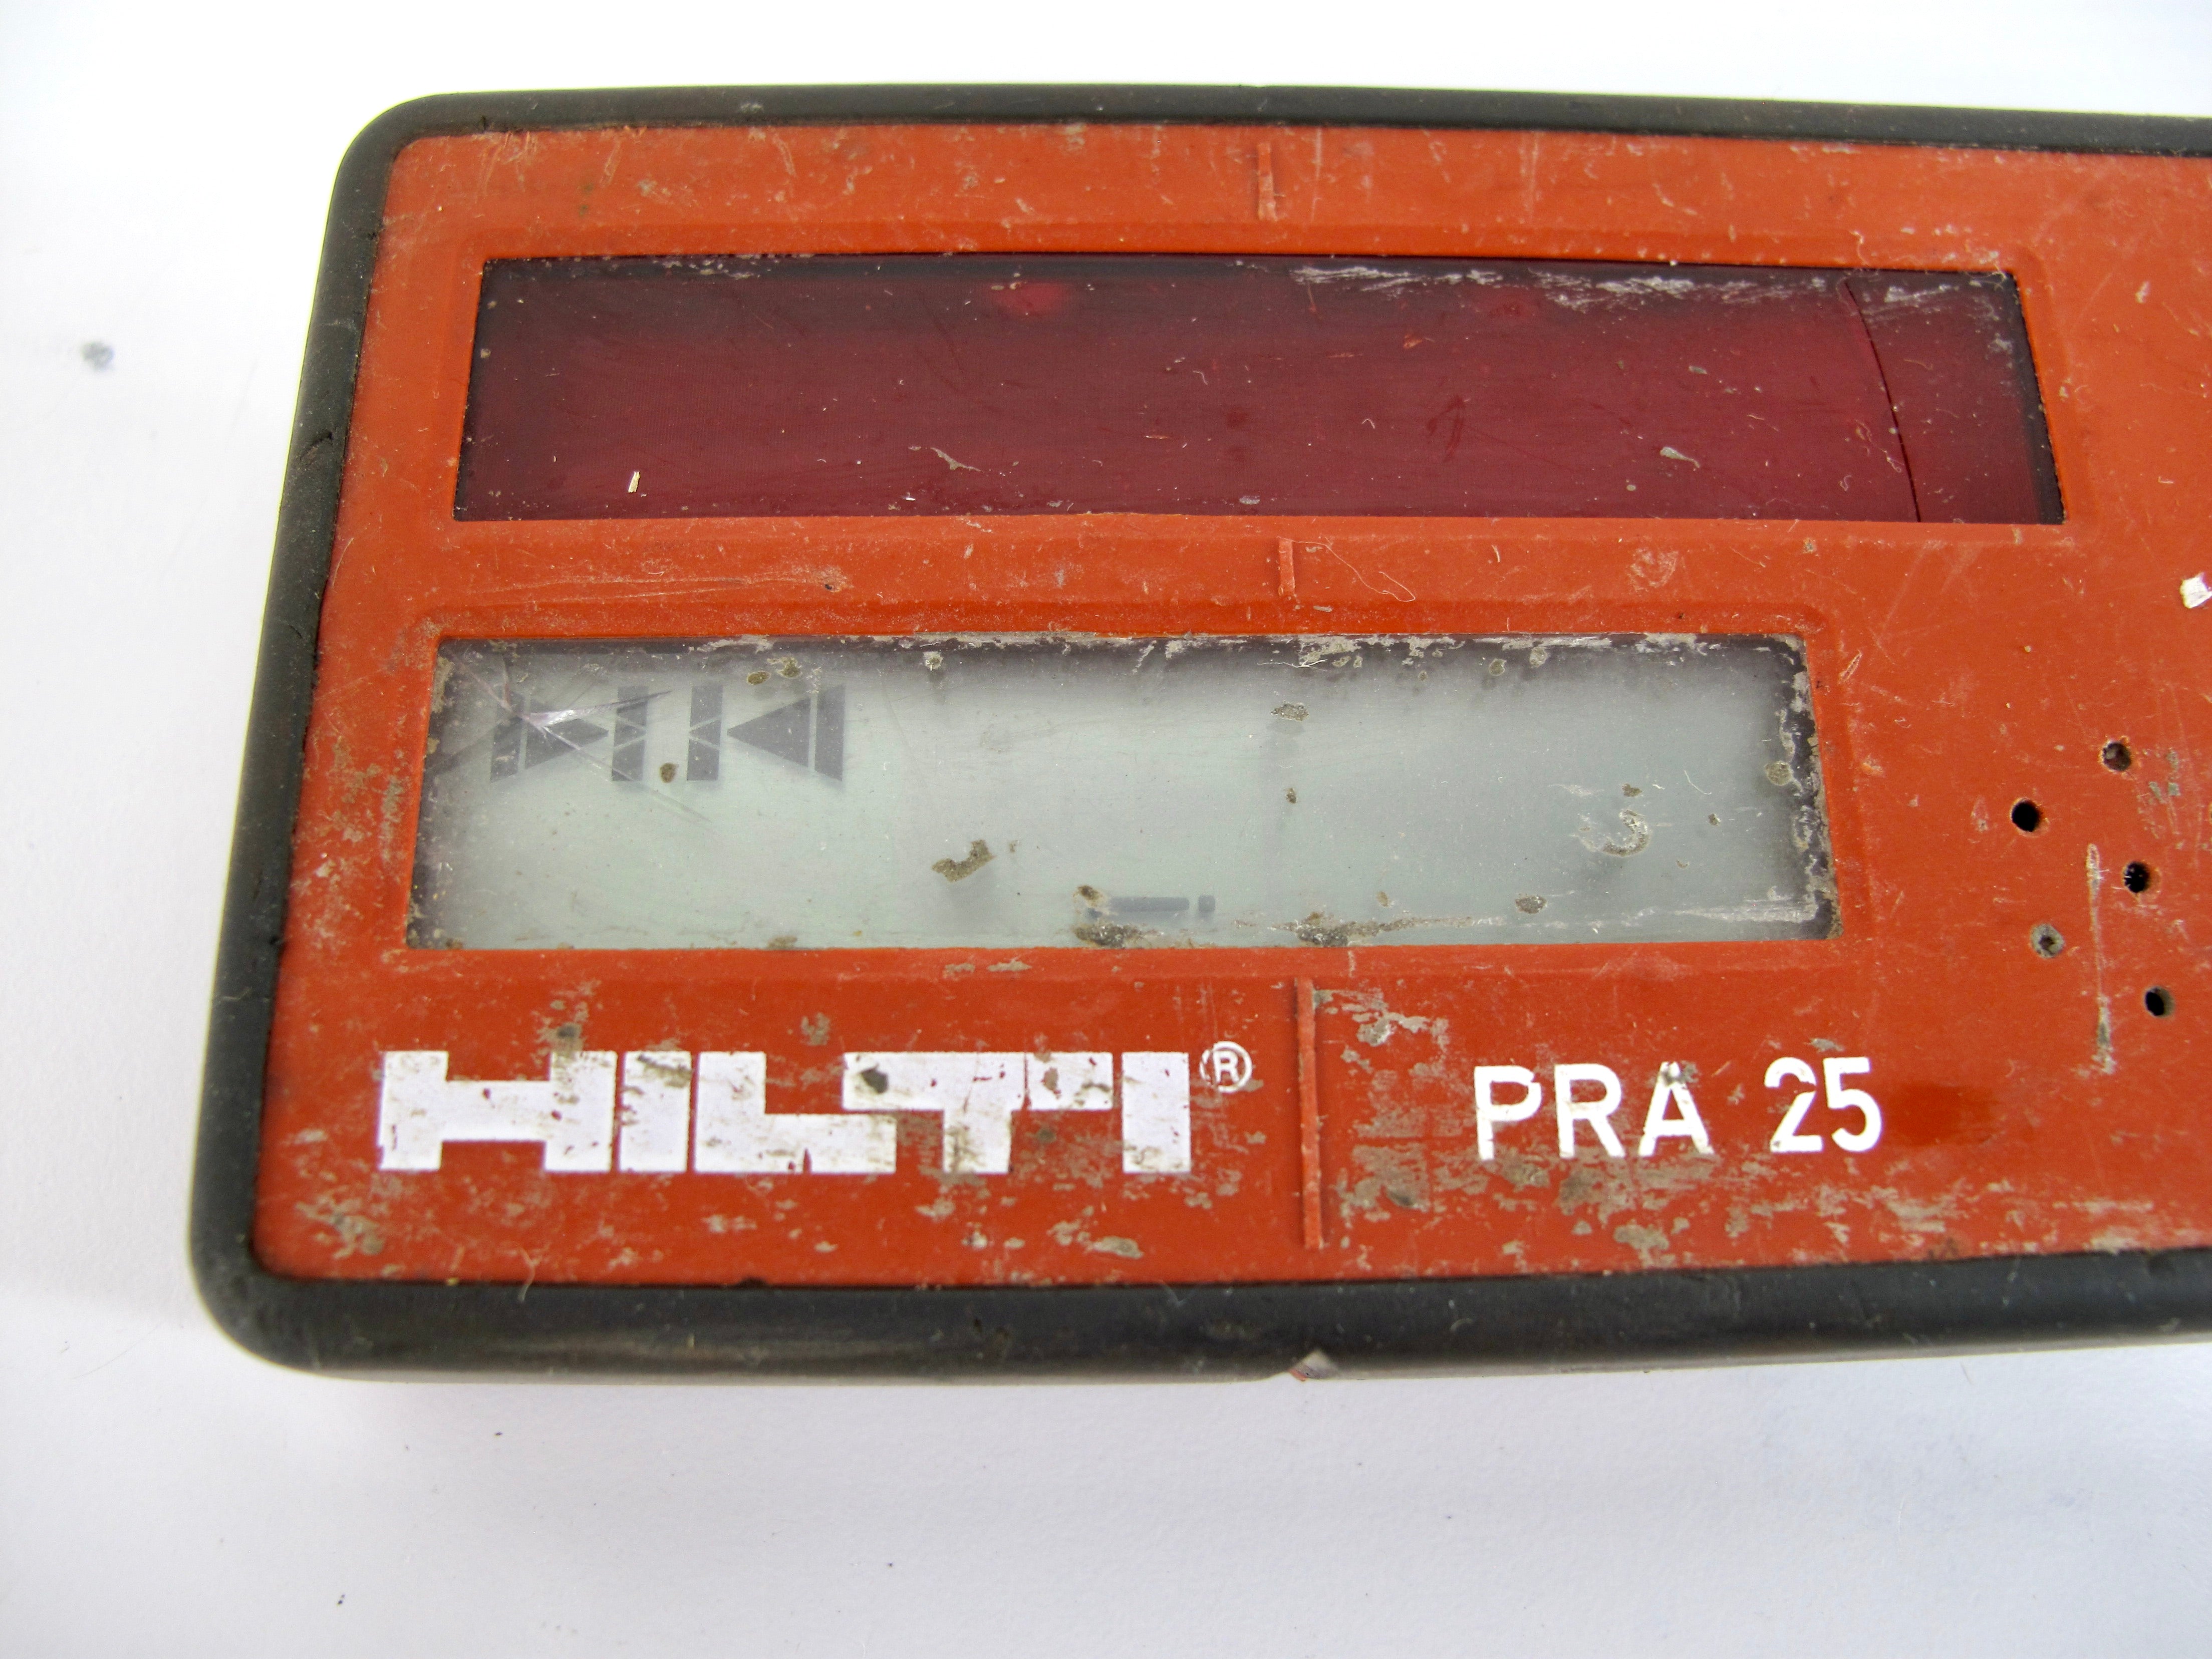 Hilti PRA 25 Rotary Construction Laser Receiver Detector